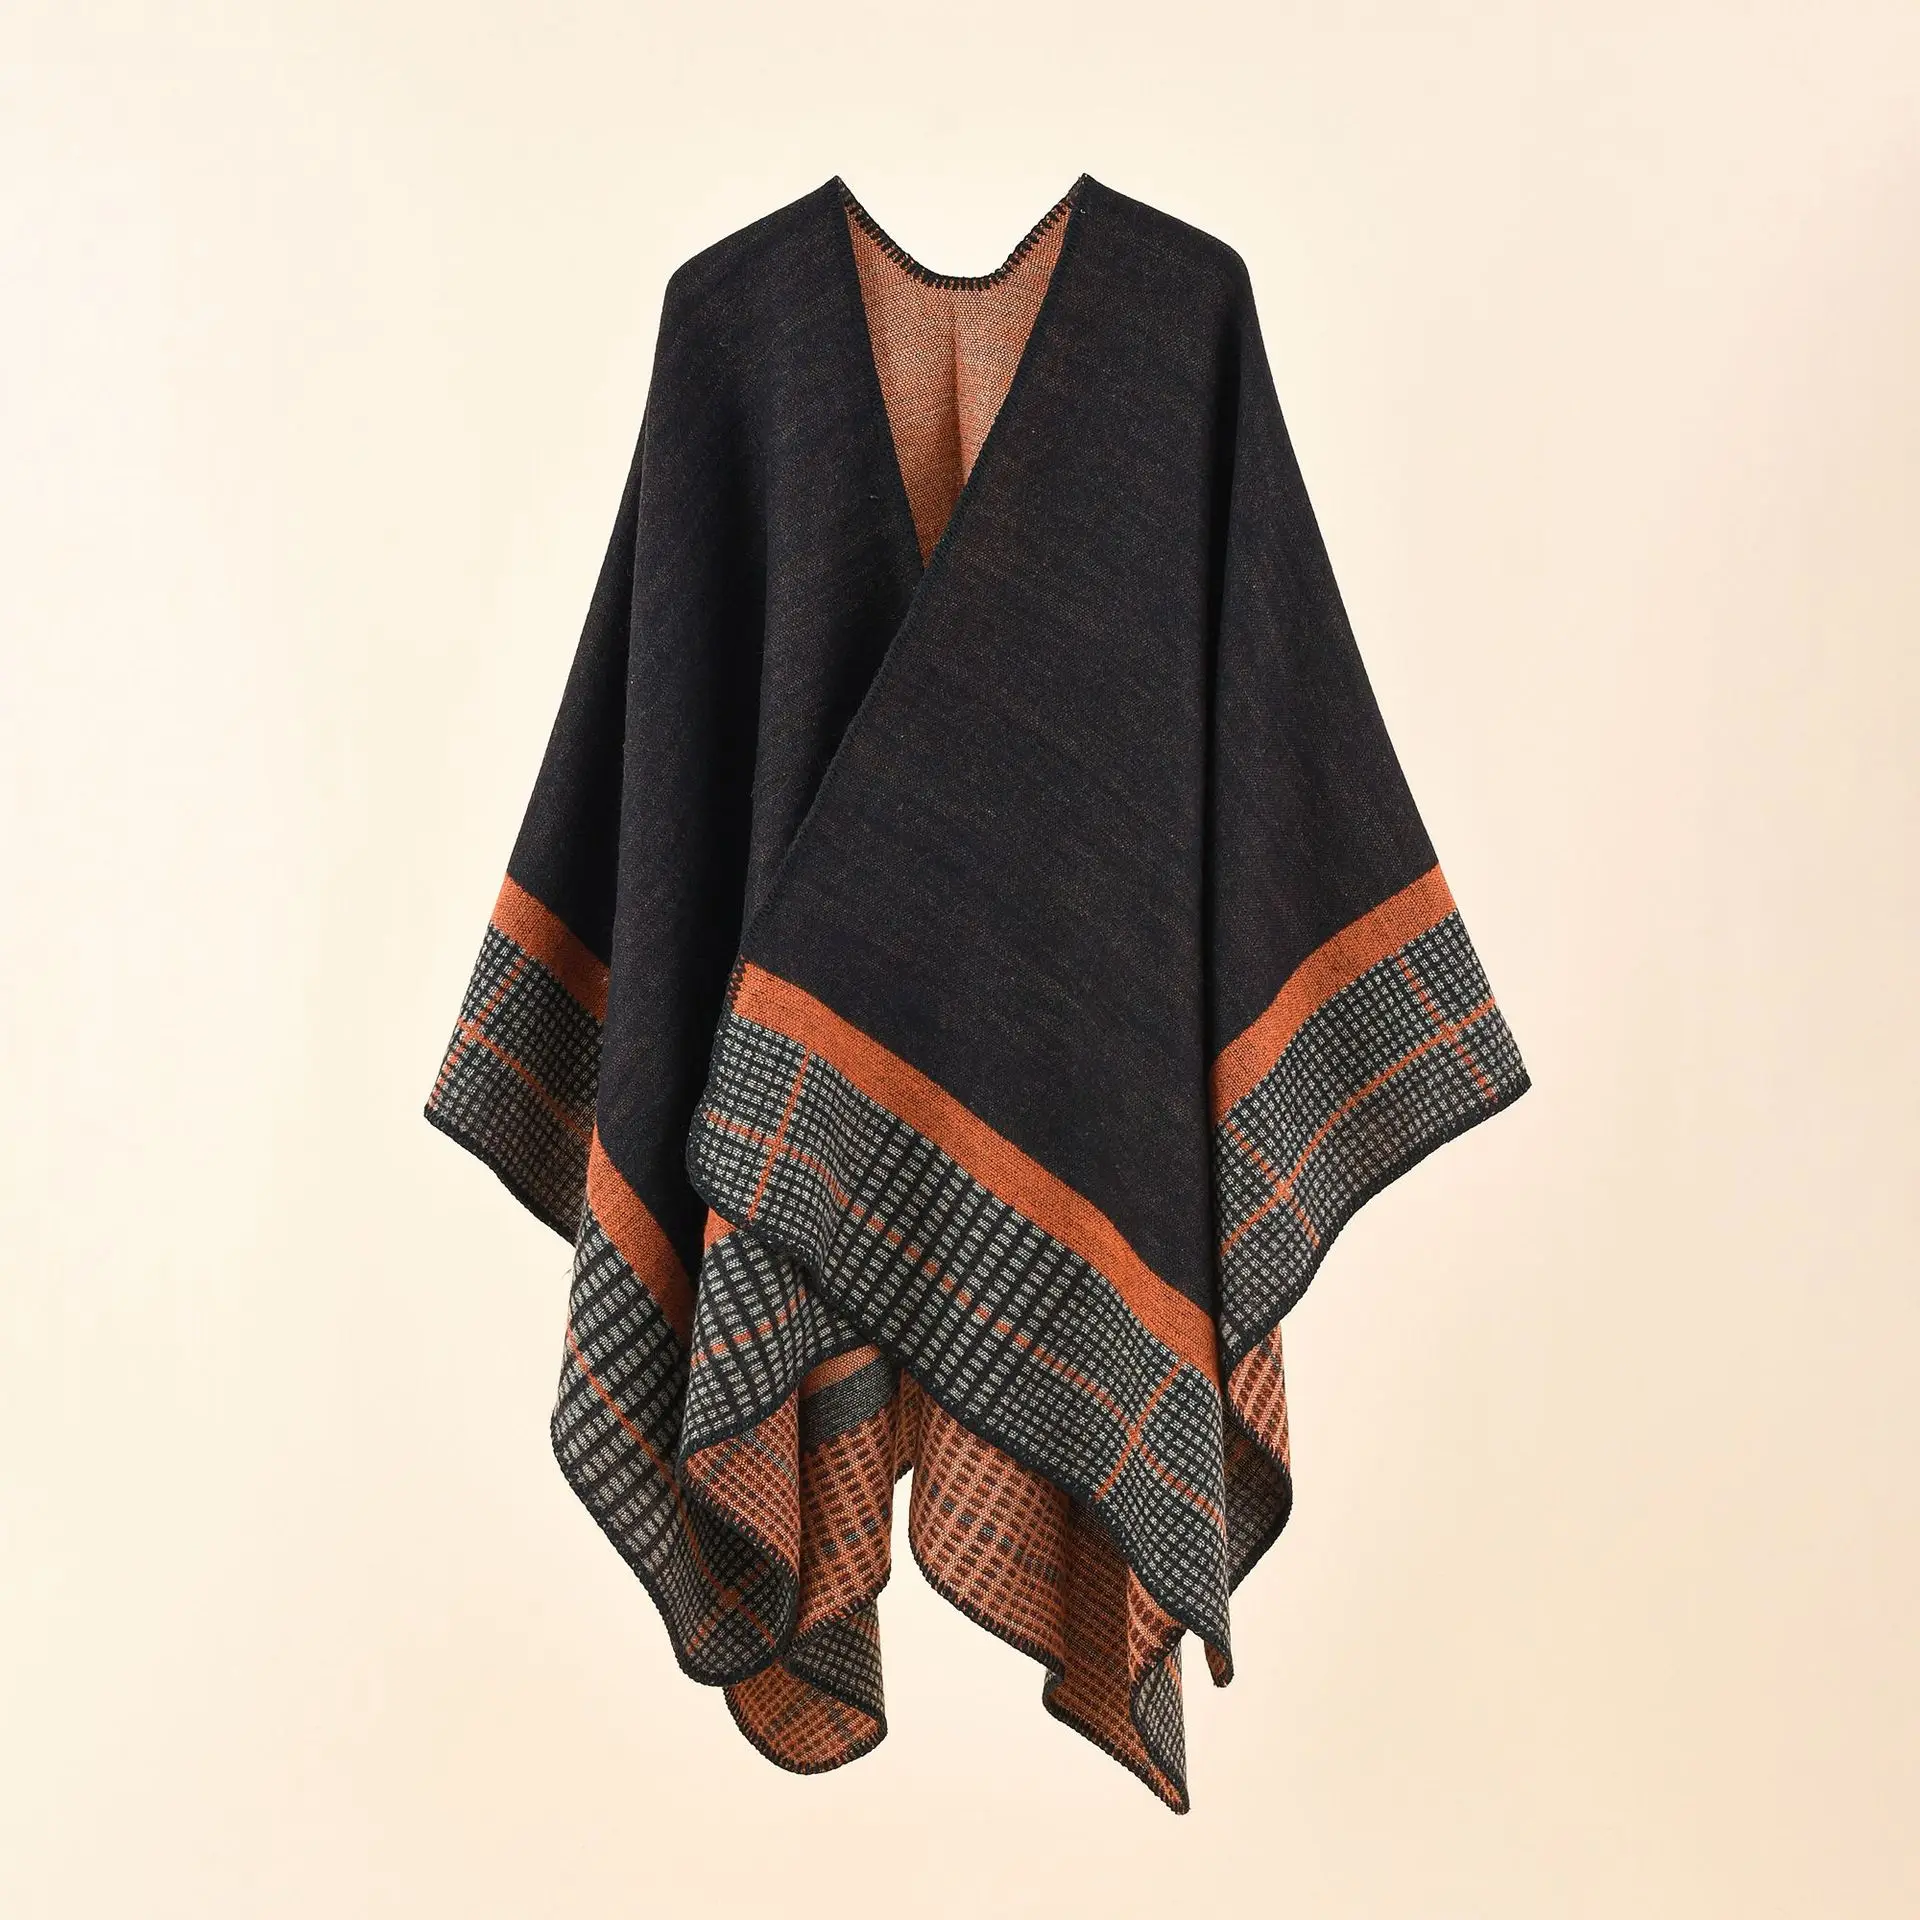 Women's Striped Small Square Imitation Cashmere Acrylic Warm Air Conditioning Shawl Sunscreen Cloak Tourism Cloak Black